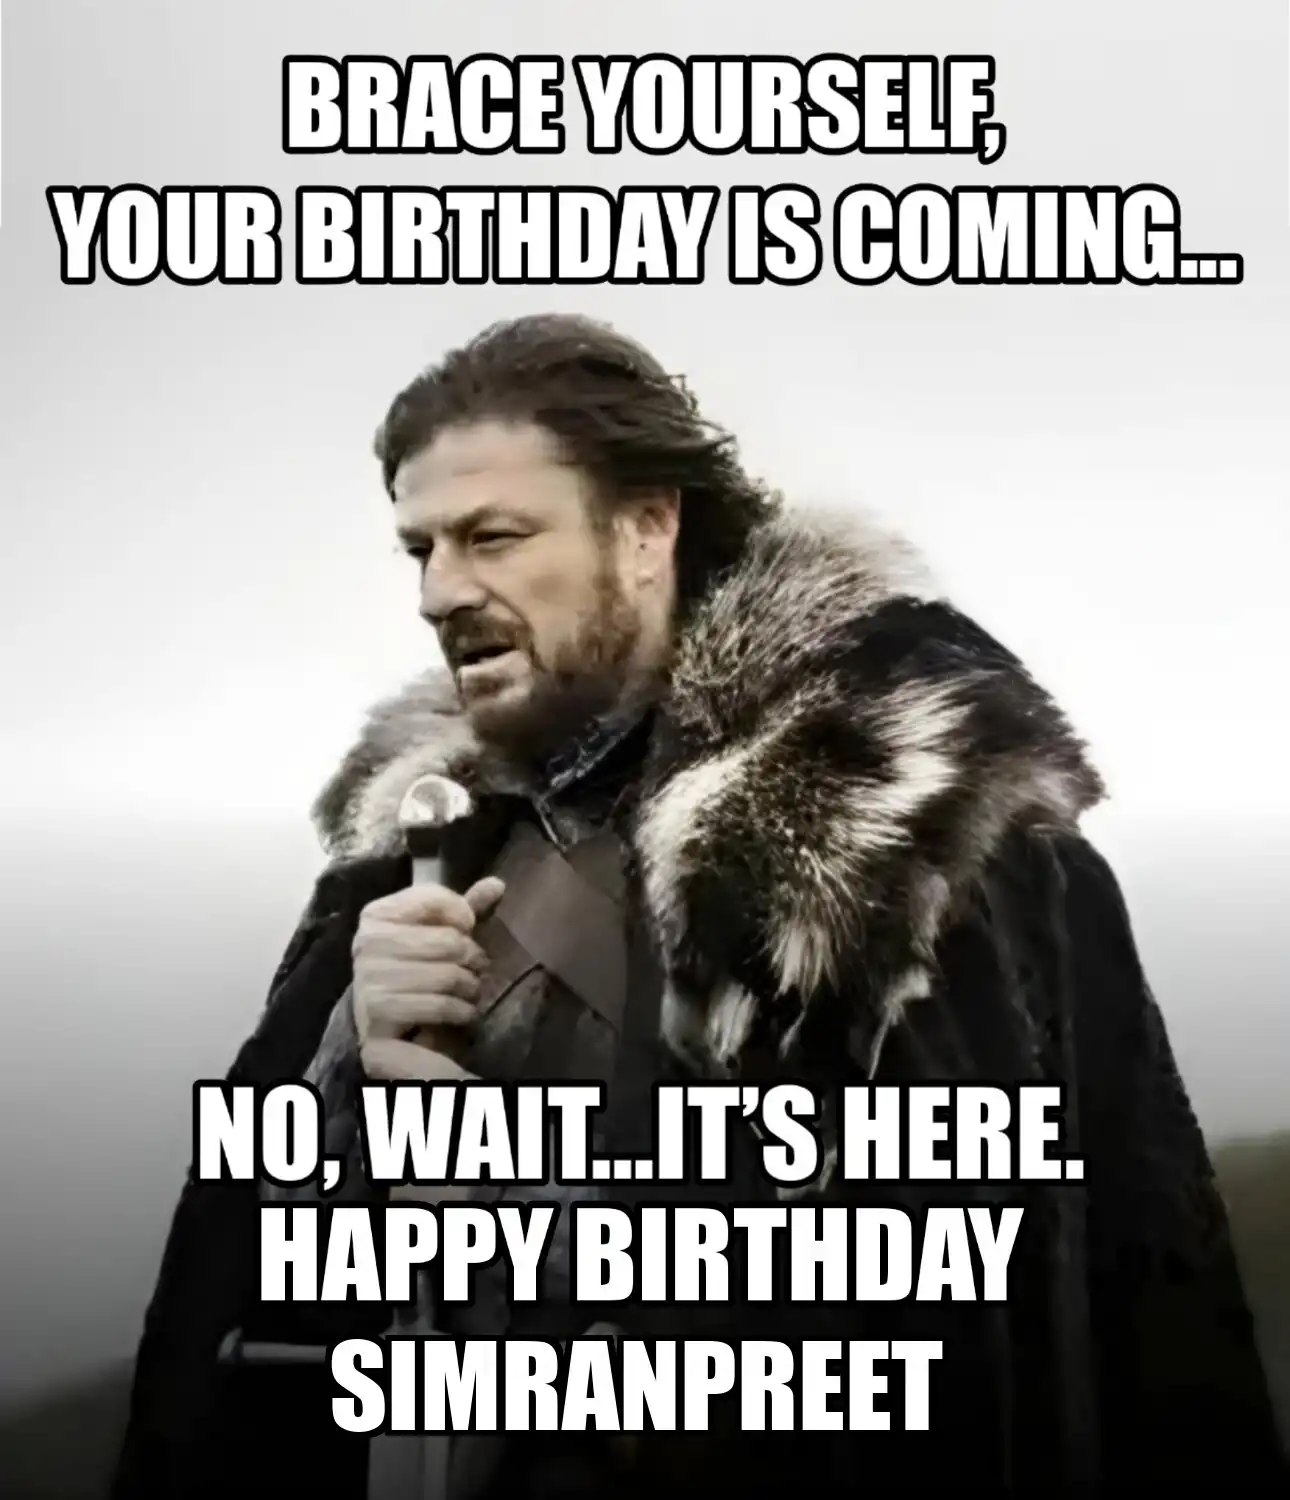 Happy Birthday Simranpreet Brace Yourself Your Birthday Is Coming Meme